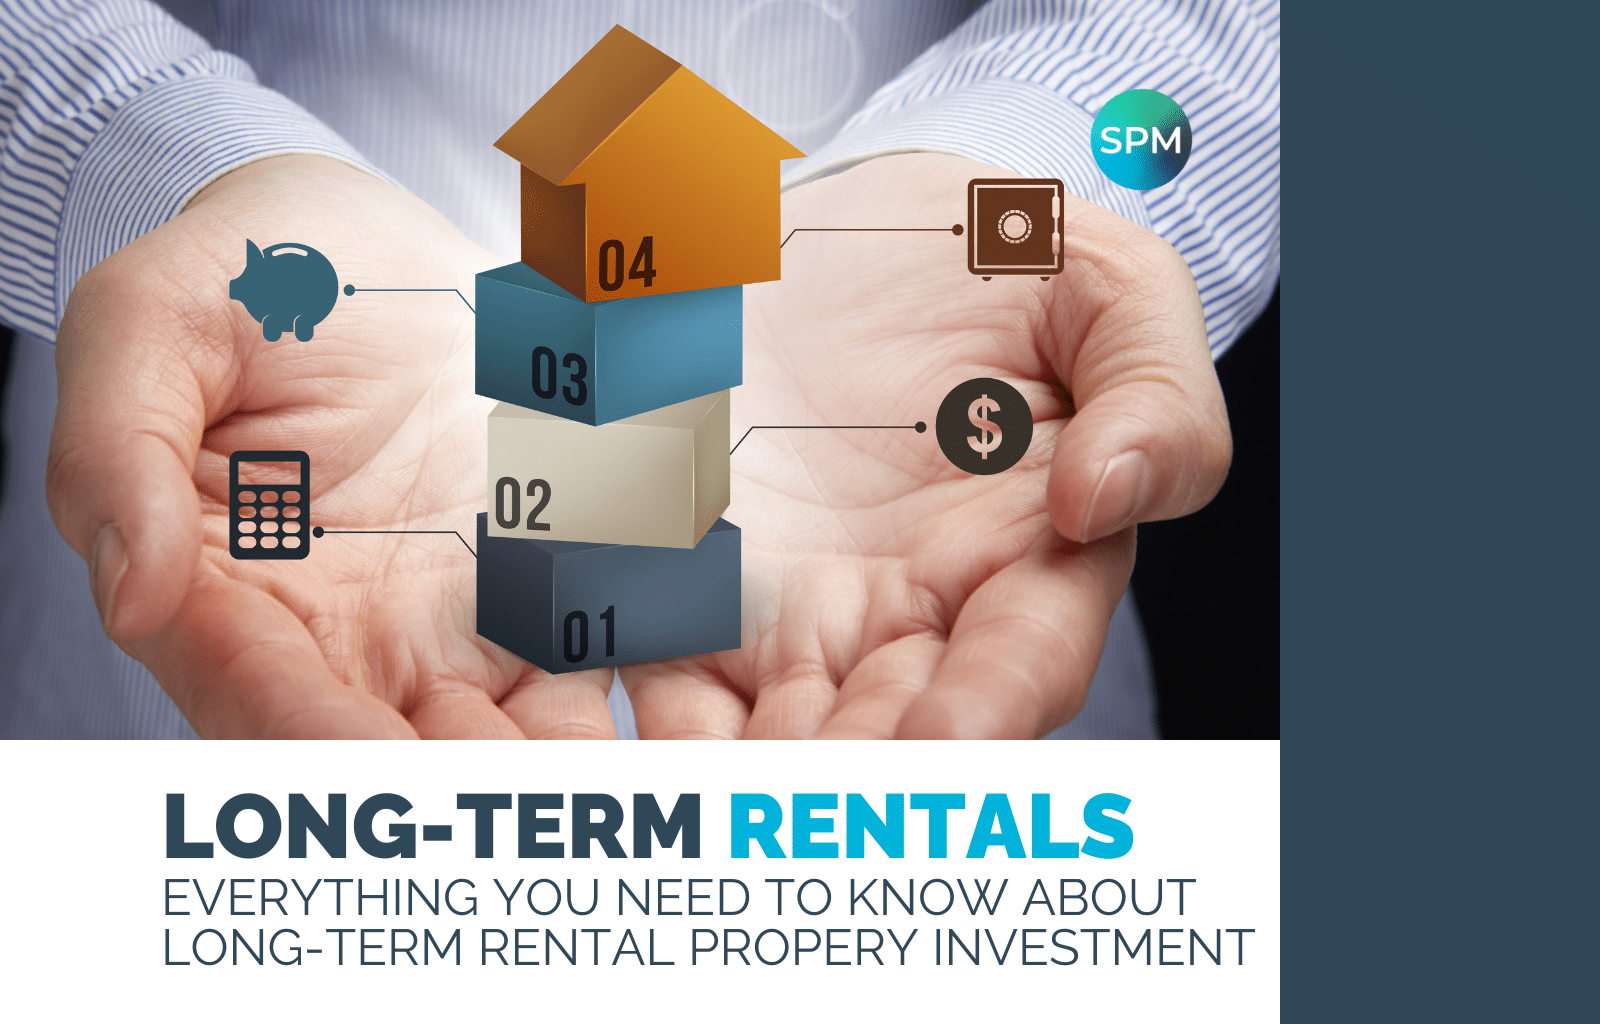 Long-term rental property